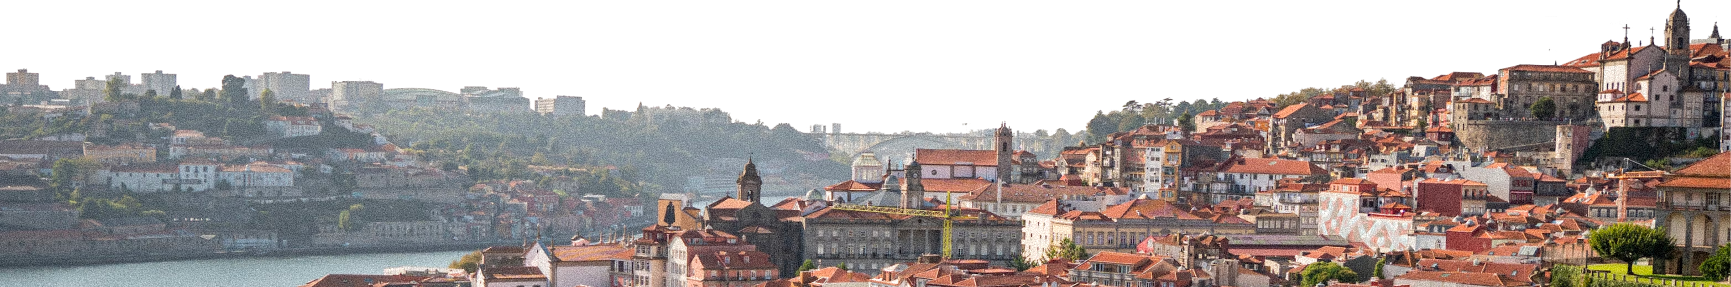 A landscape photo of downtown Porto